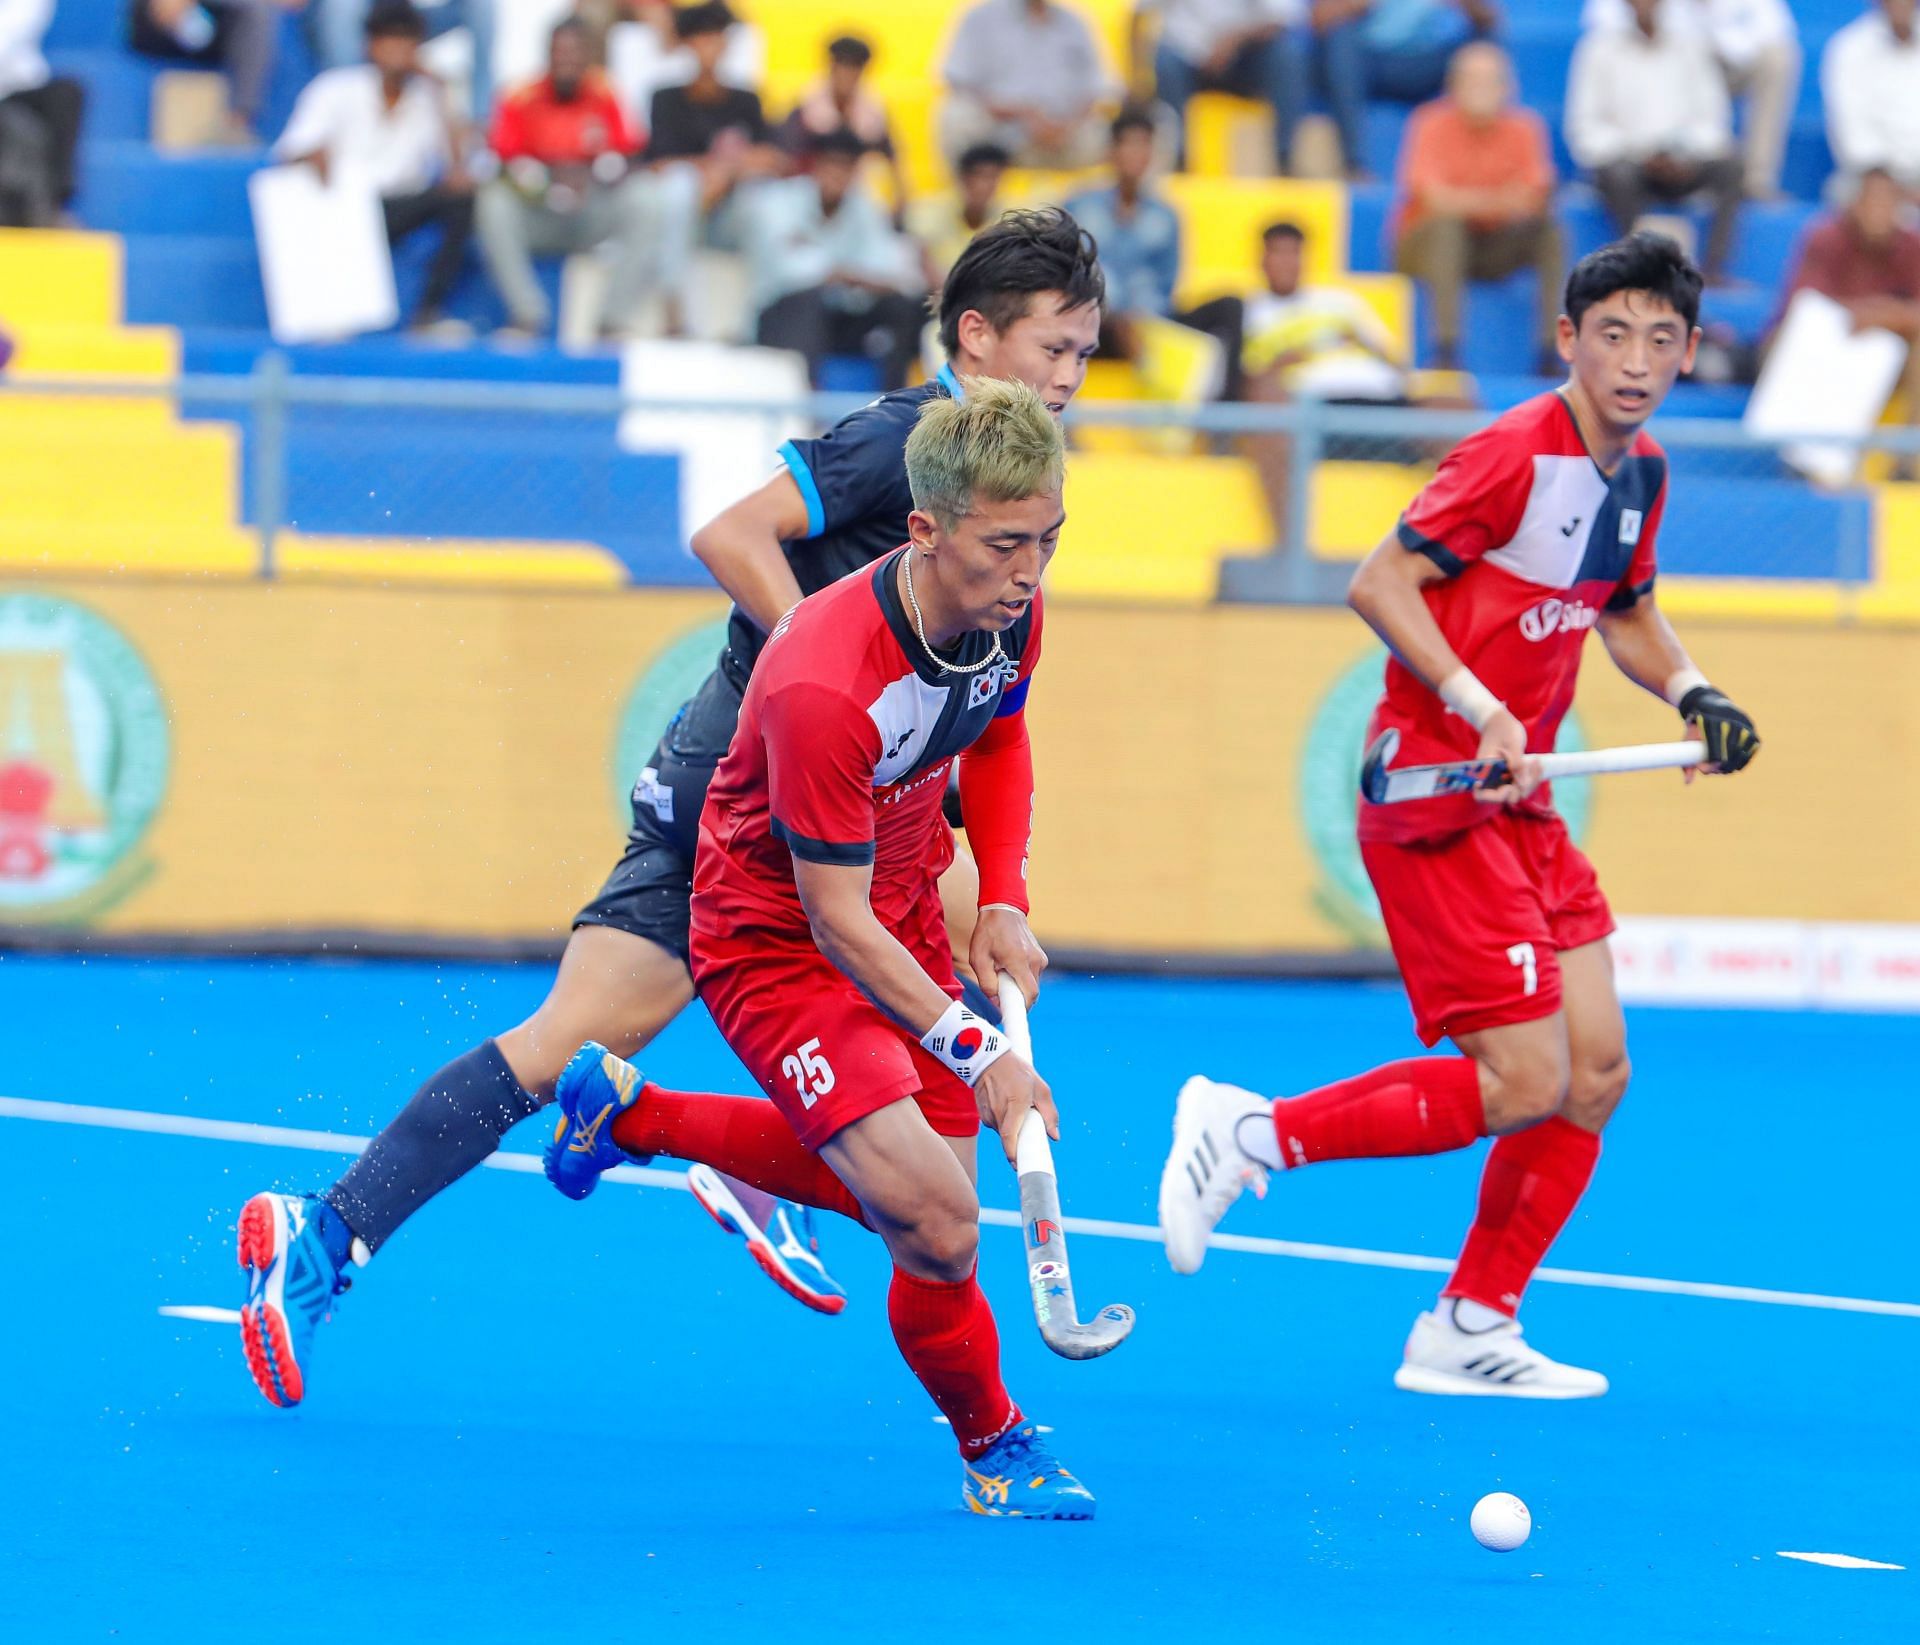 Korea Hockey player Jang Jong-hyun (in red) - PC: Hockey India